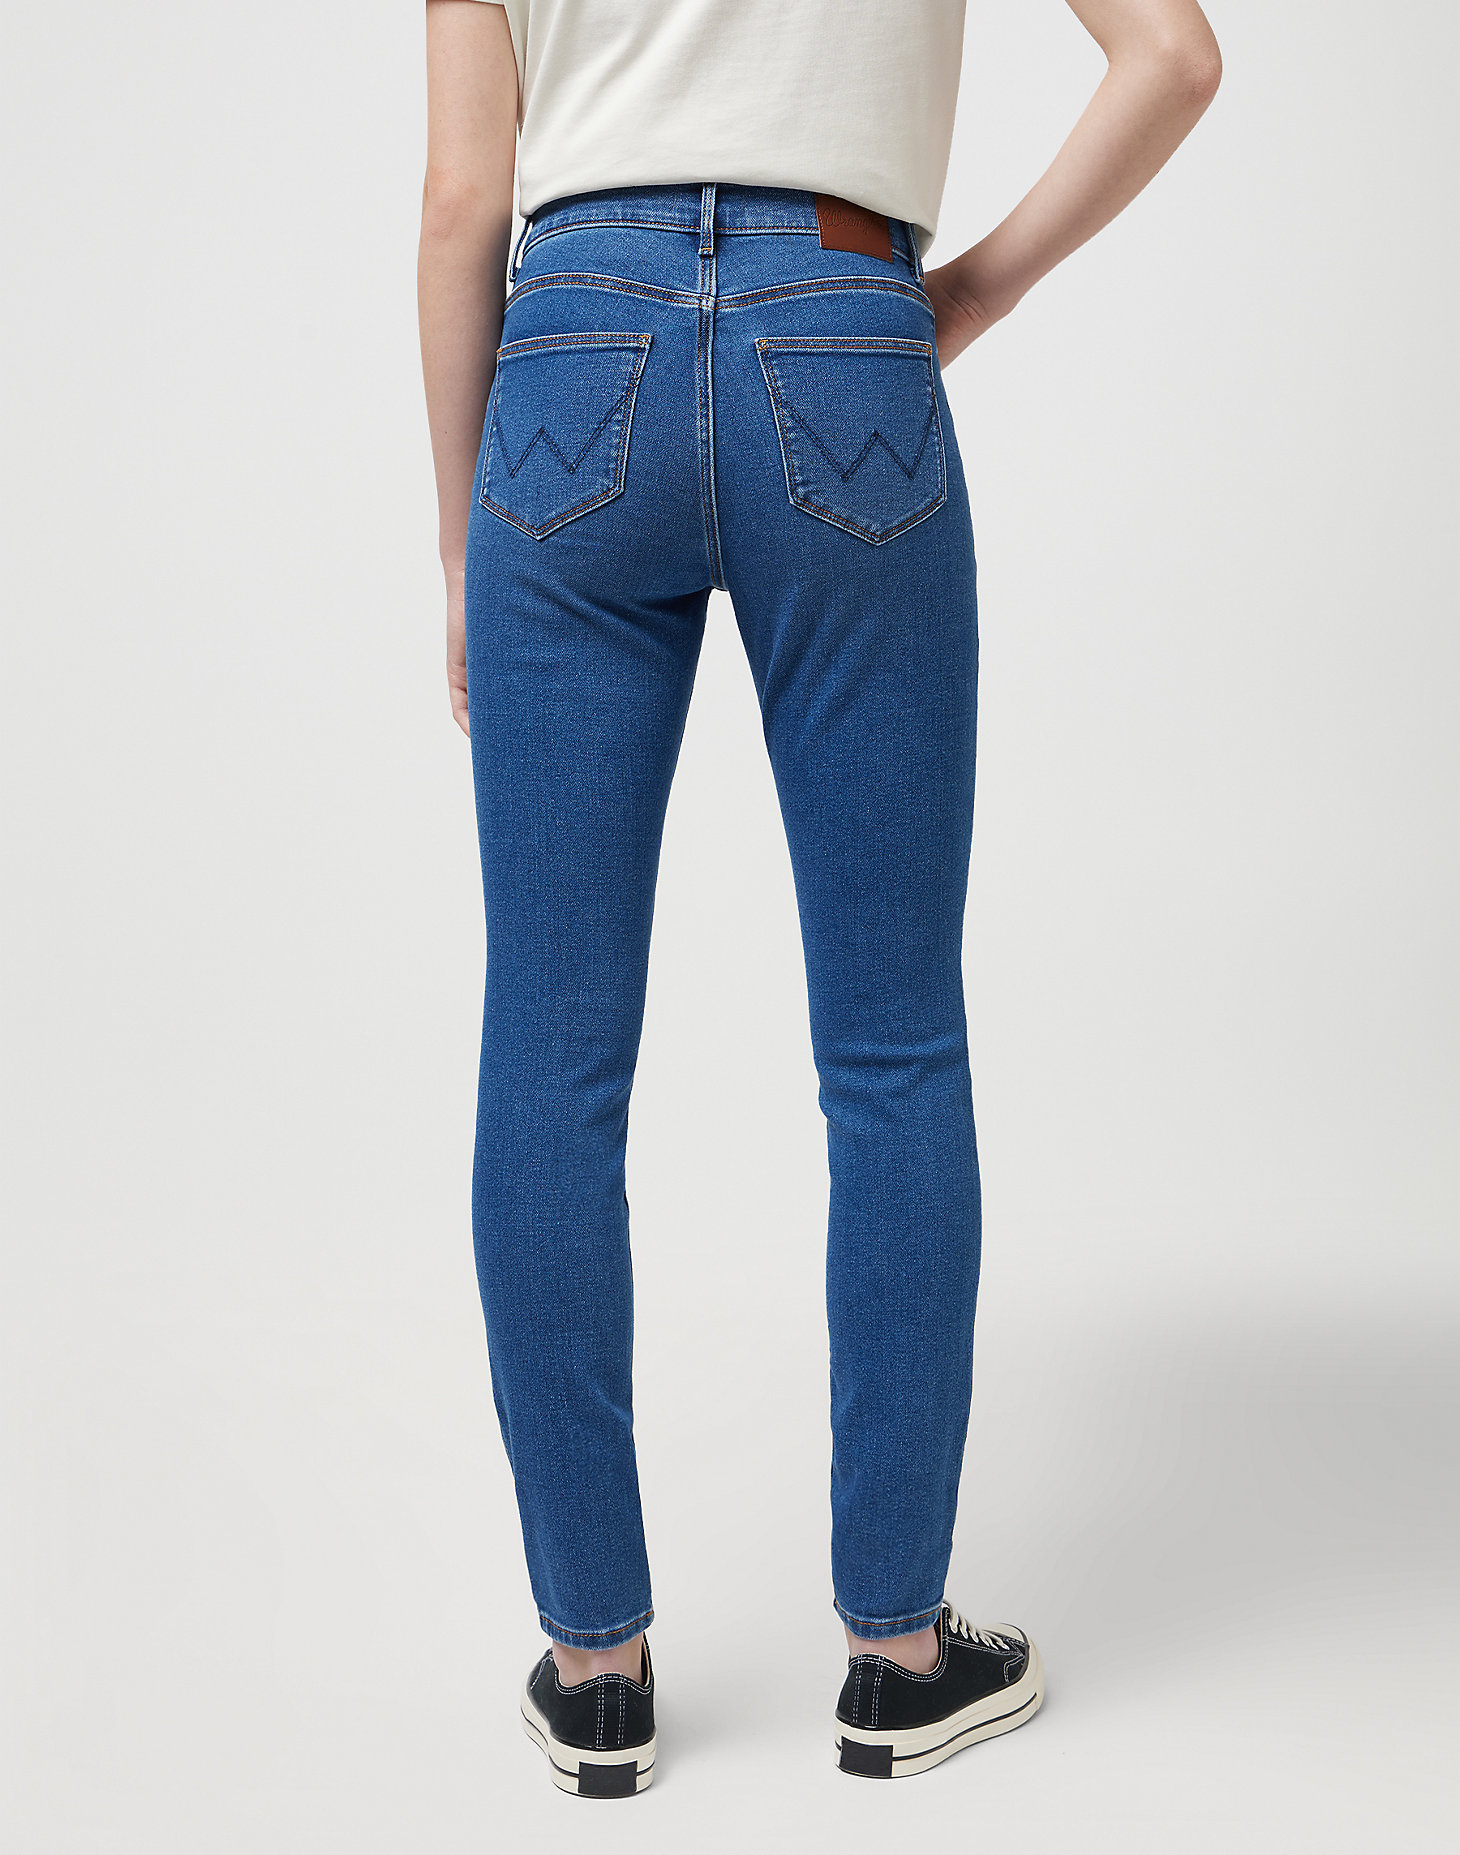 High Skinny Jeans in Camellia alternative view 2